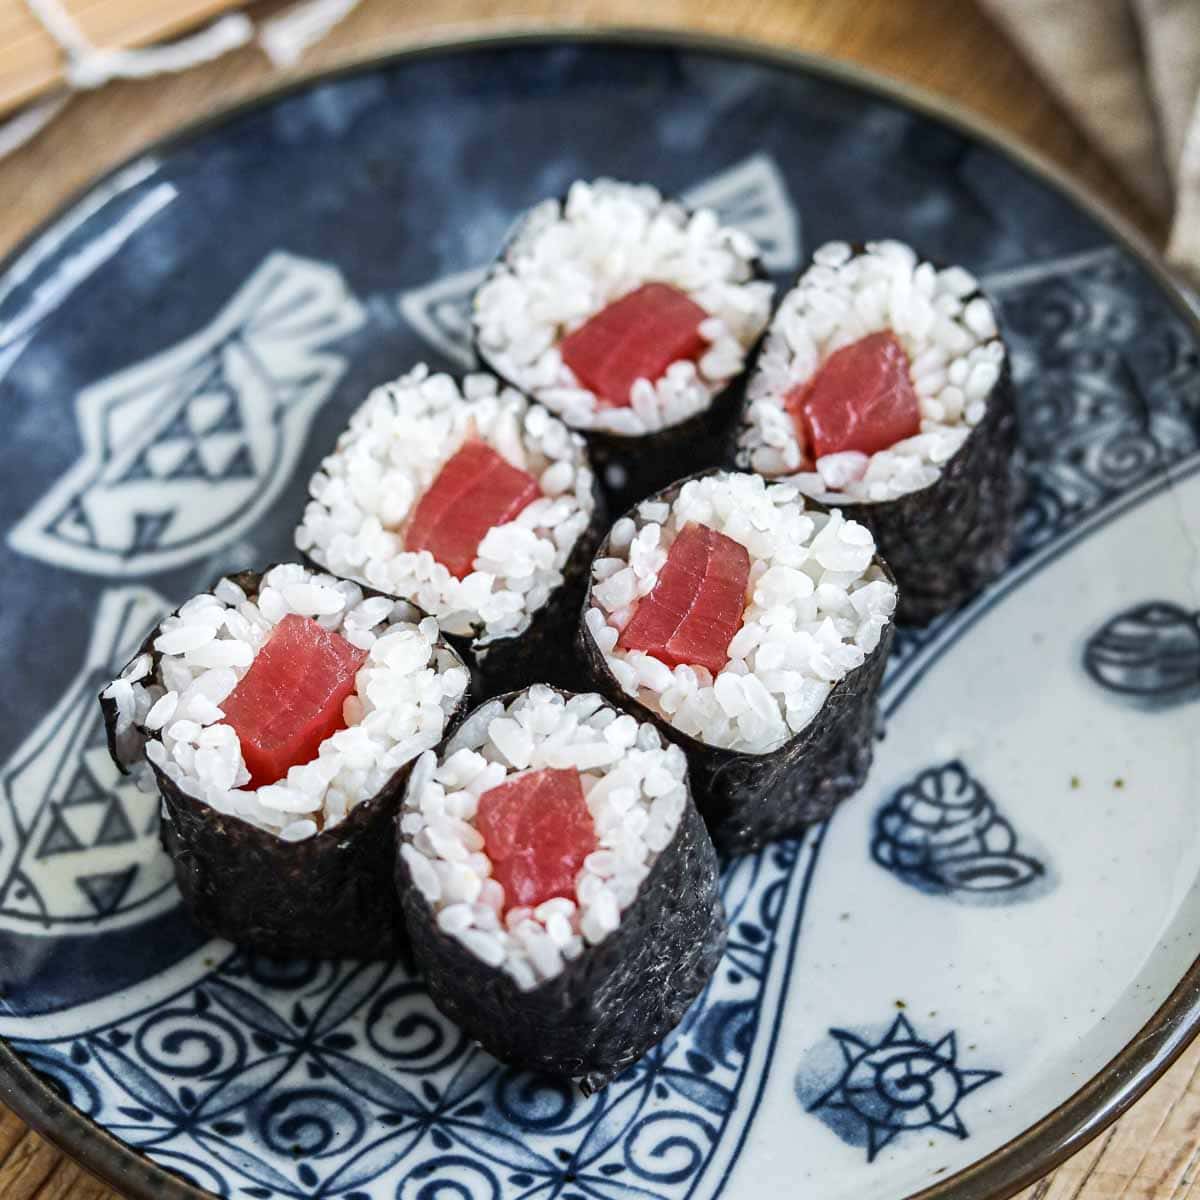 https://theheirloompantry.co/wp-content/uploads/2022/11/tekka-maki-tuna-sushi-roll-the-heirloom-pantry-03.jpg